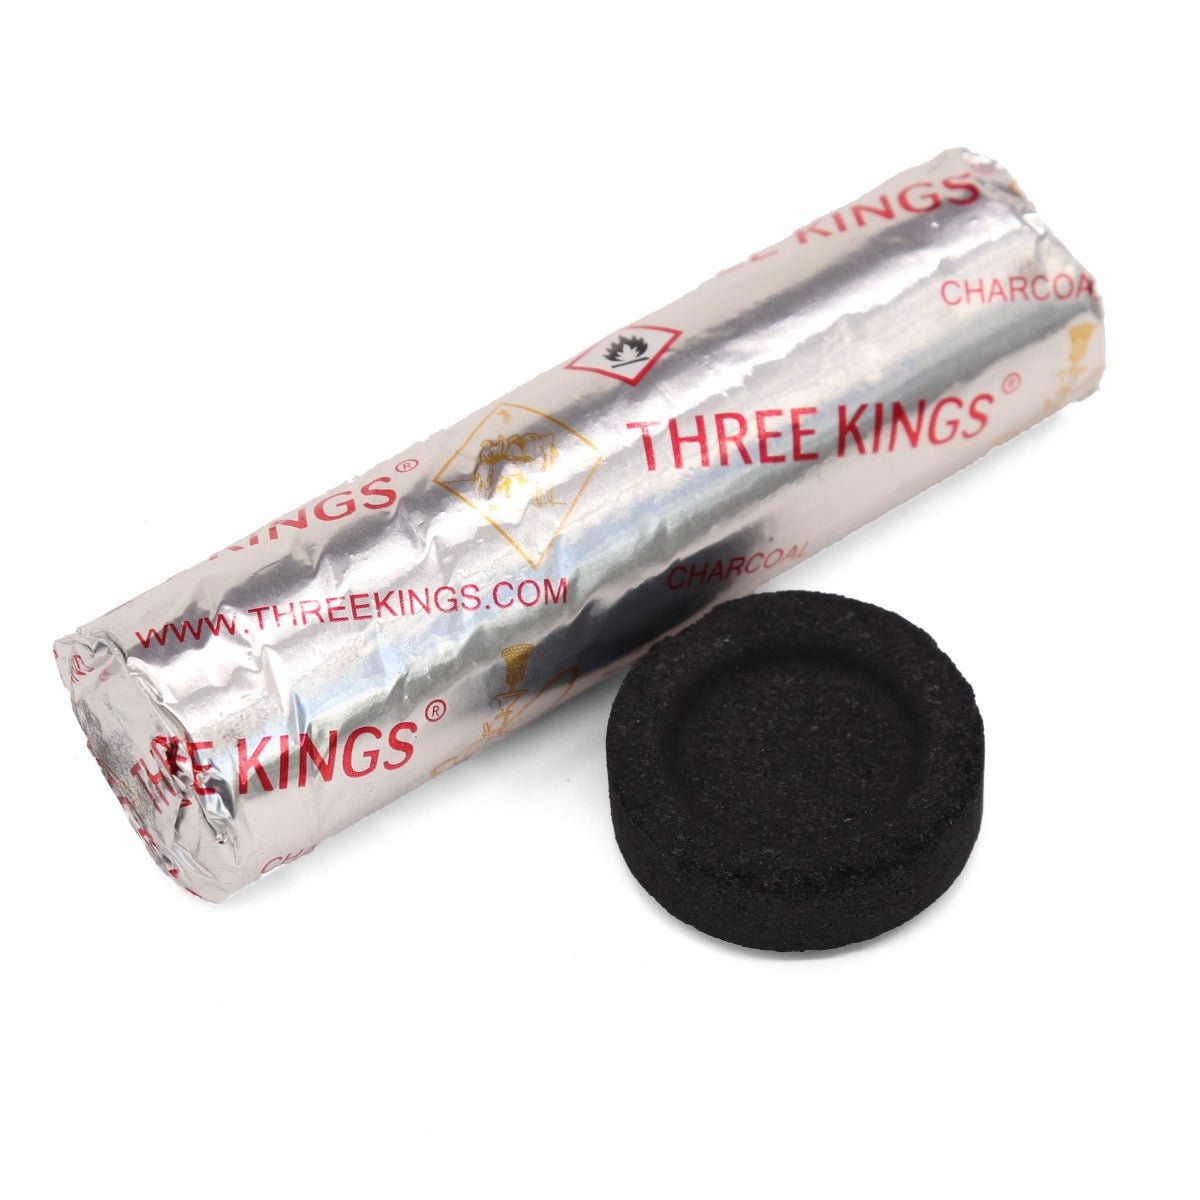 Charcoal Three Kings Regular 10 pack - 13 Moons